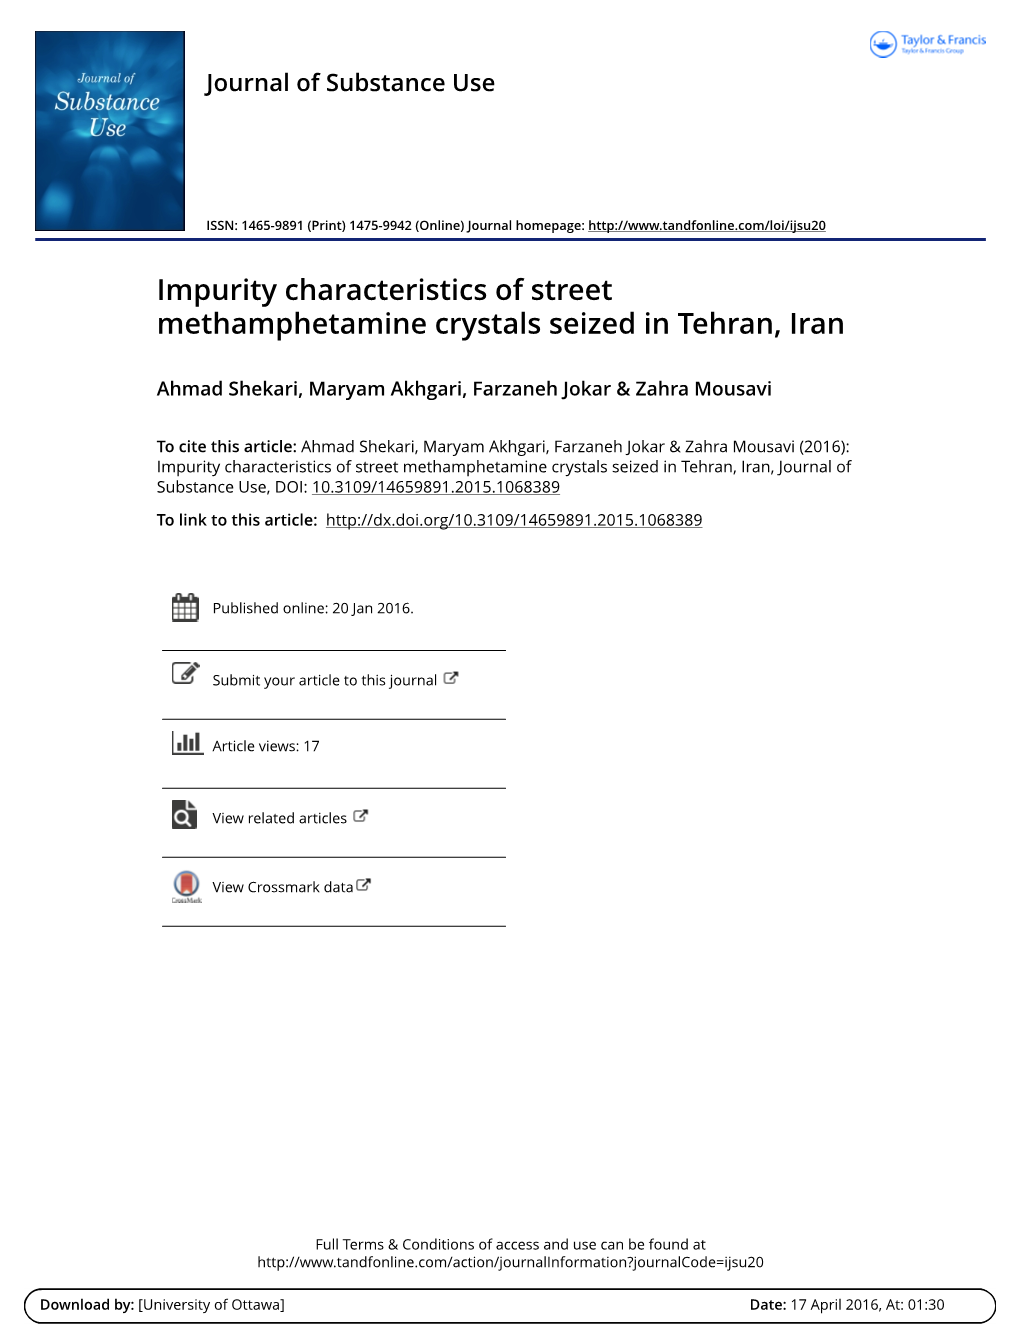 Impurity Characteristics of Street Methamphetamine Crystals Seized in Tehran, Iran